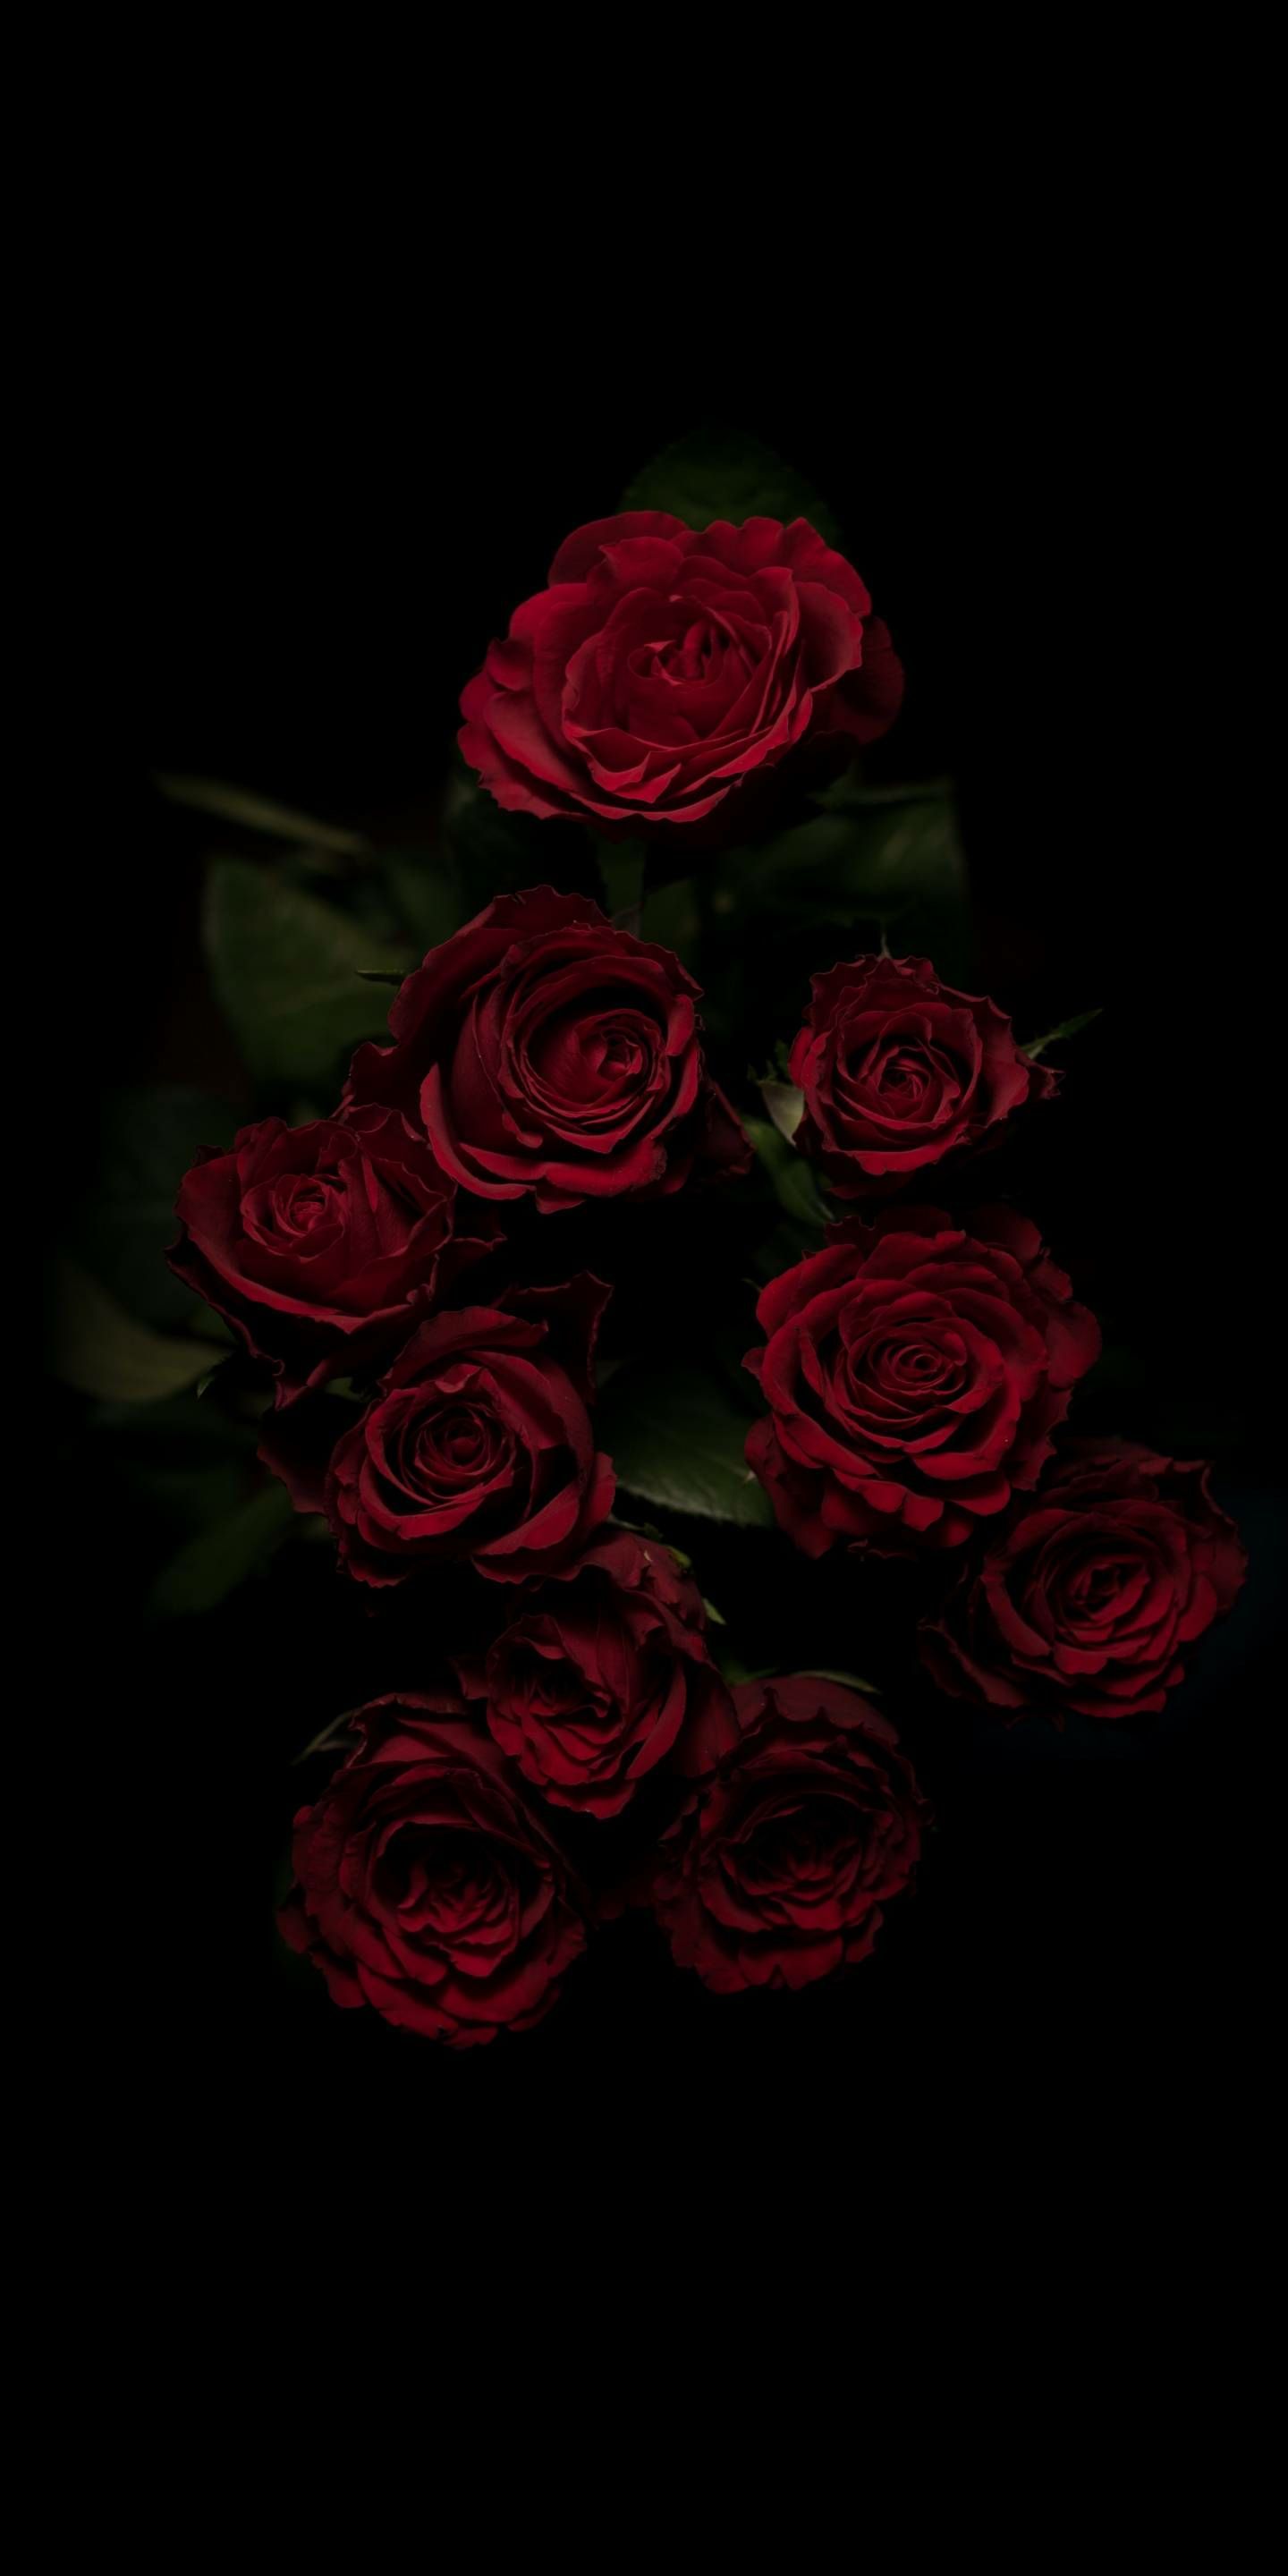 Aesthetics From my Camera Roll. Flowers black